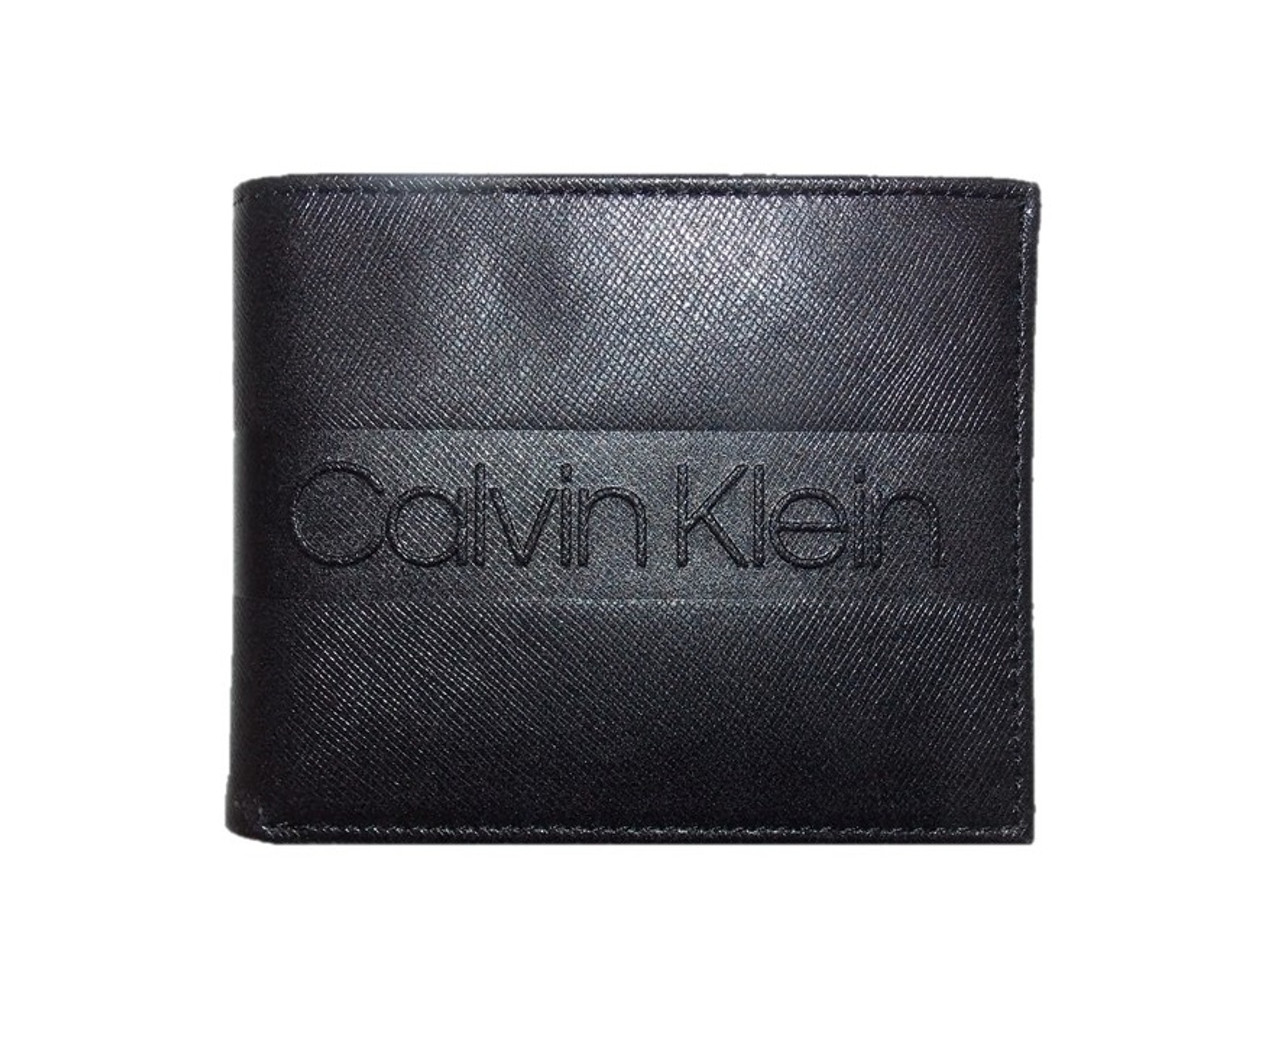 Descubrir 57+ imagen black calvin klein wallet - Thptnganamst.edu.vn